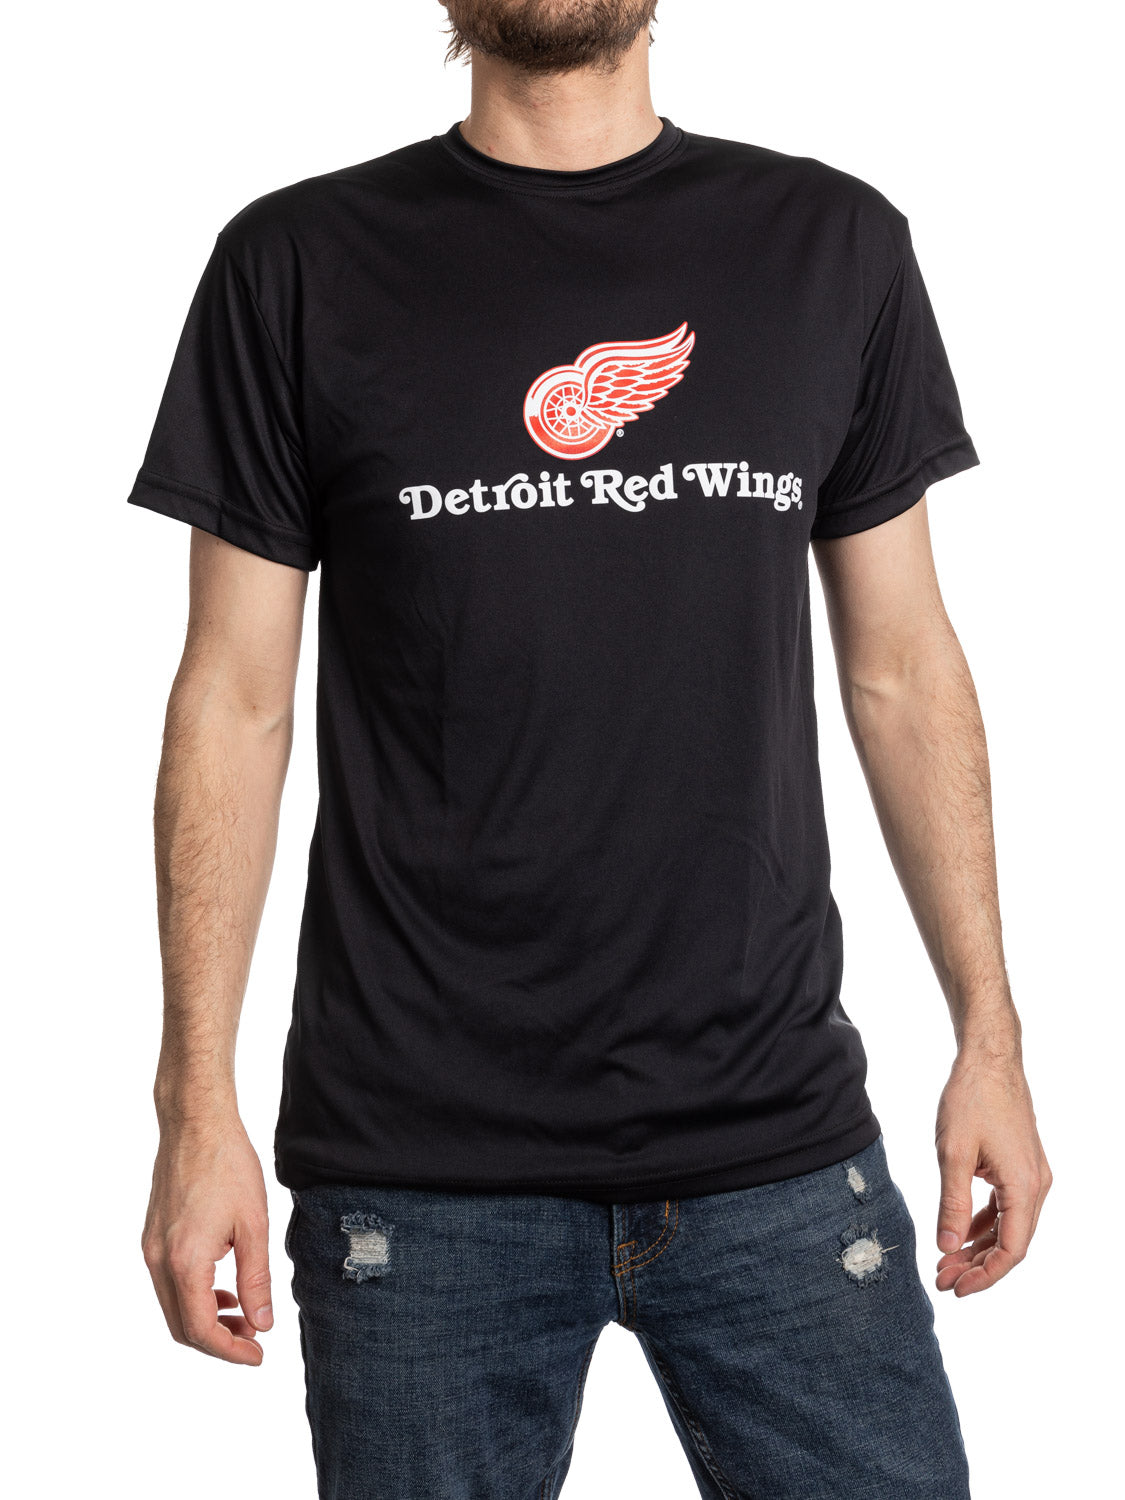 Detroit Red Wings Short Sleeve Rashguard T Shirt - Alternate Logo